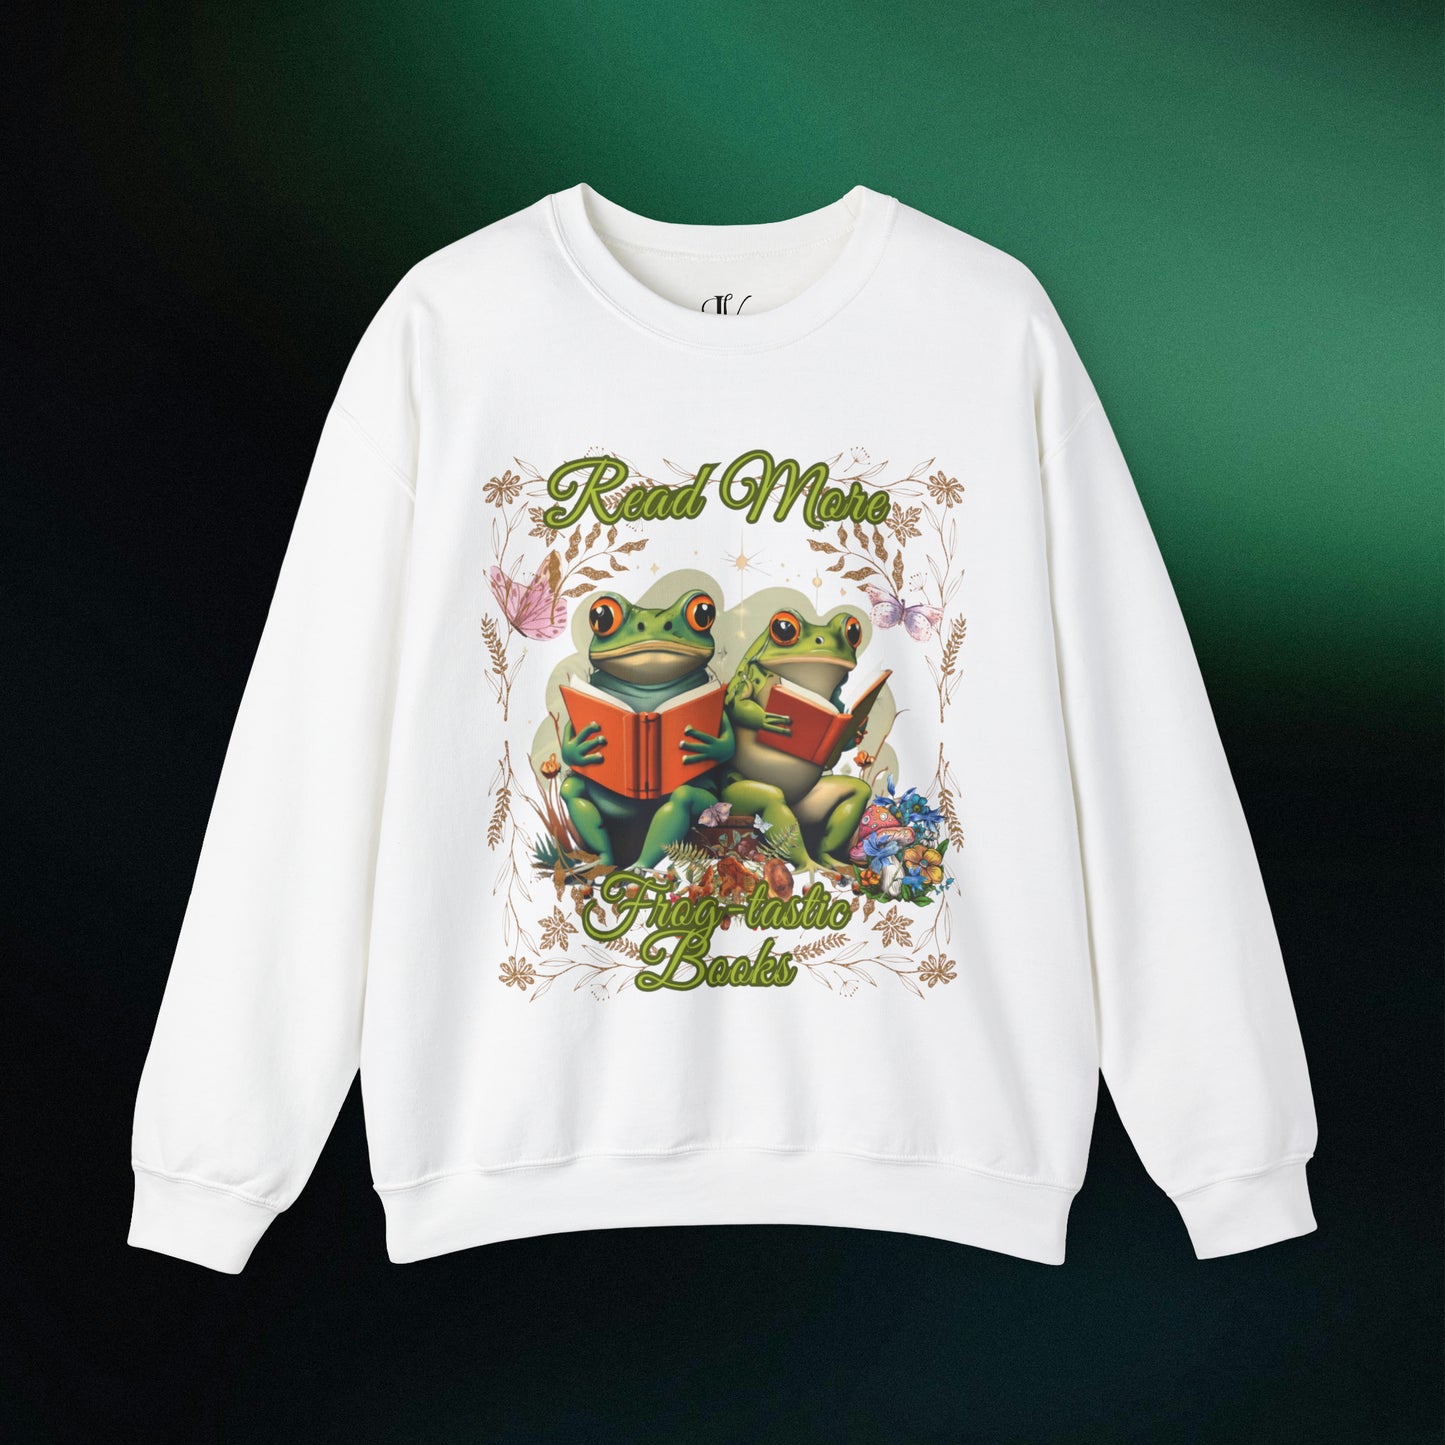 Frog Bookworm Sweatshirt | Read More Books Shirt | Aesthetic, Vintage Frog Sweatshirt Sweatshirt S White 